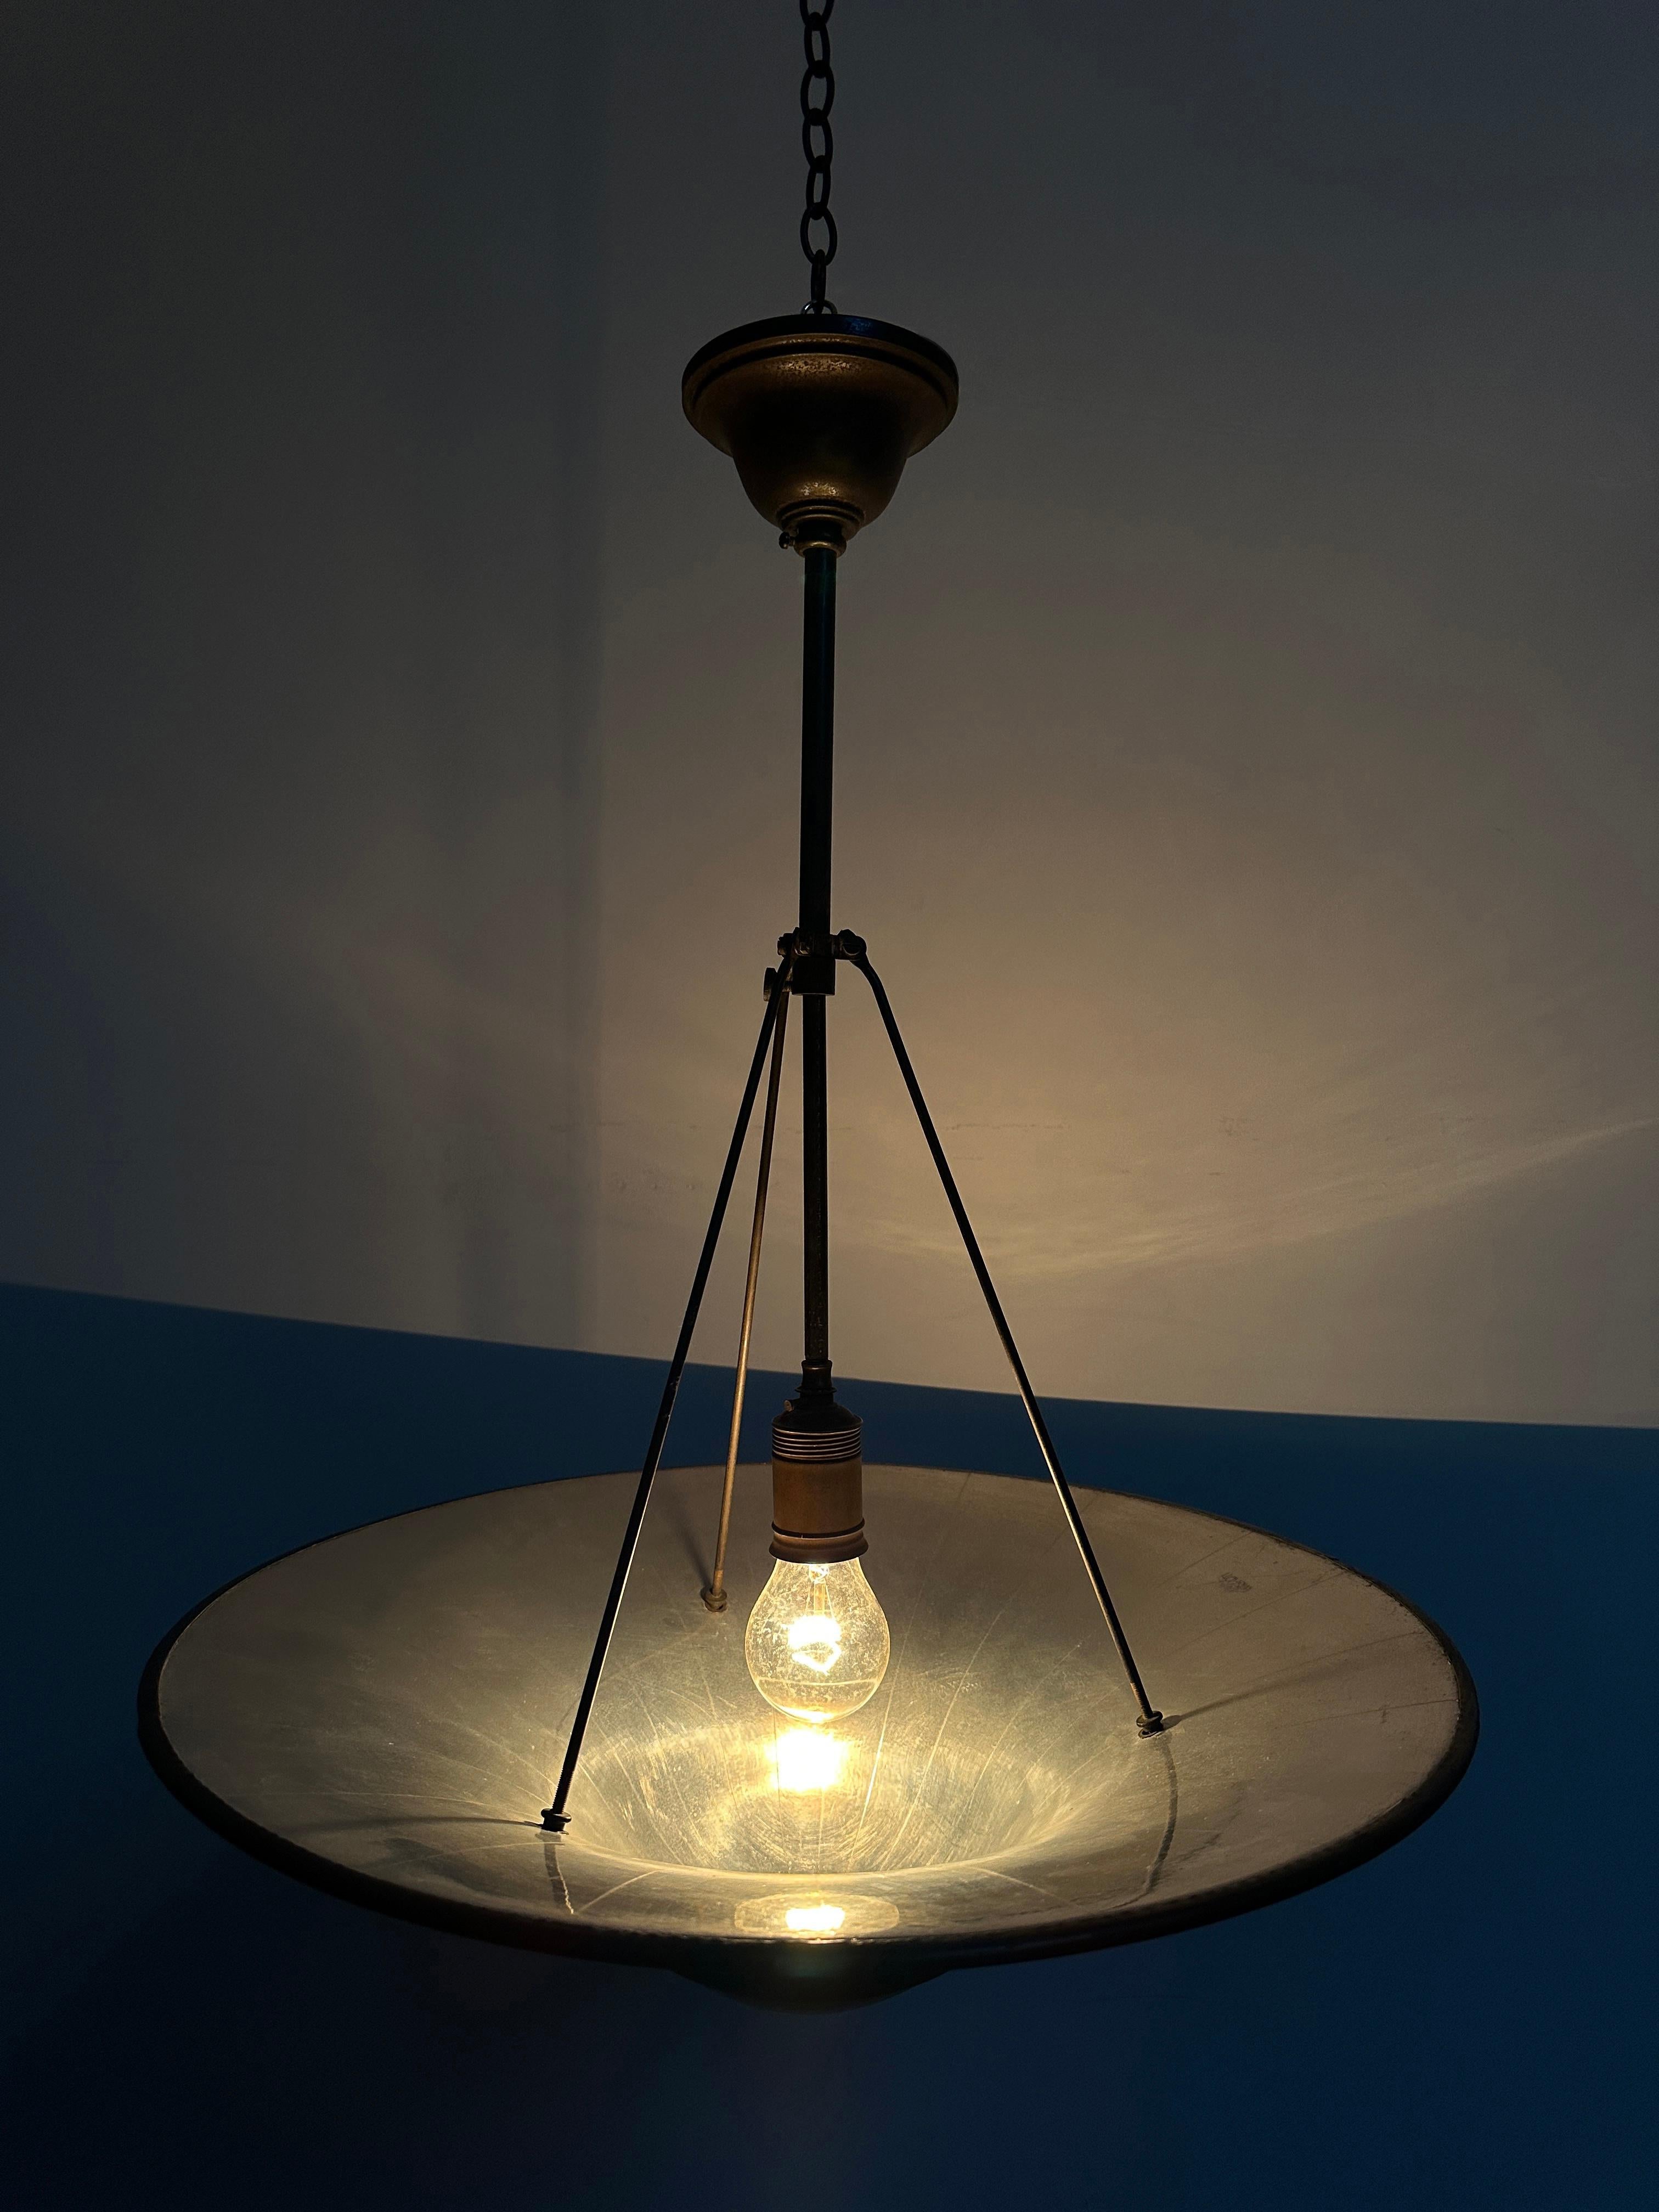 Antique Vintage Industrial Bauhaus Wiskott Mirrored Ceiling Pendant Light Lamp For Sale 3